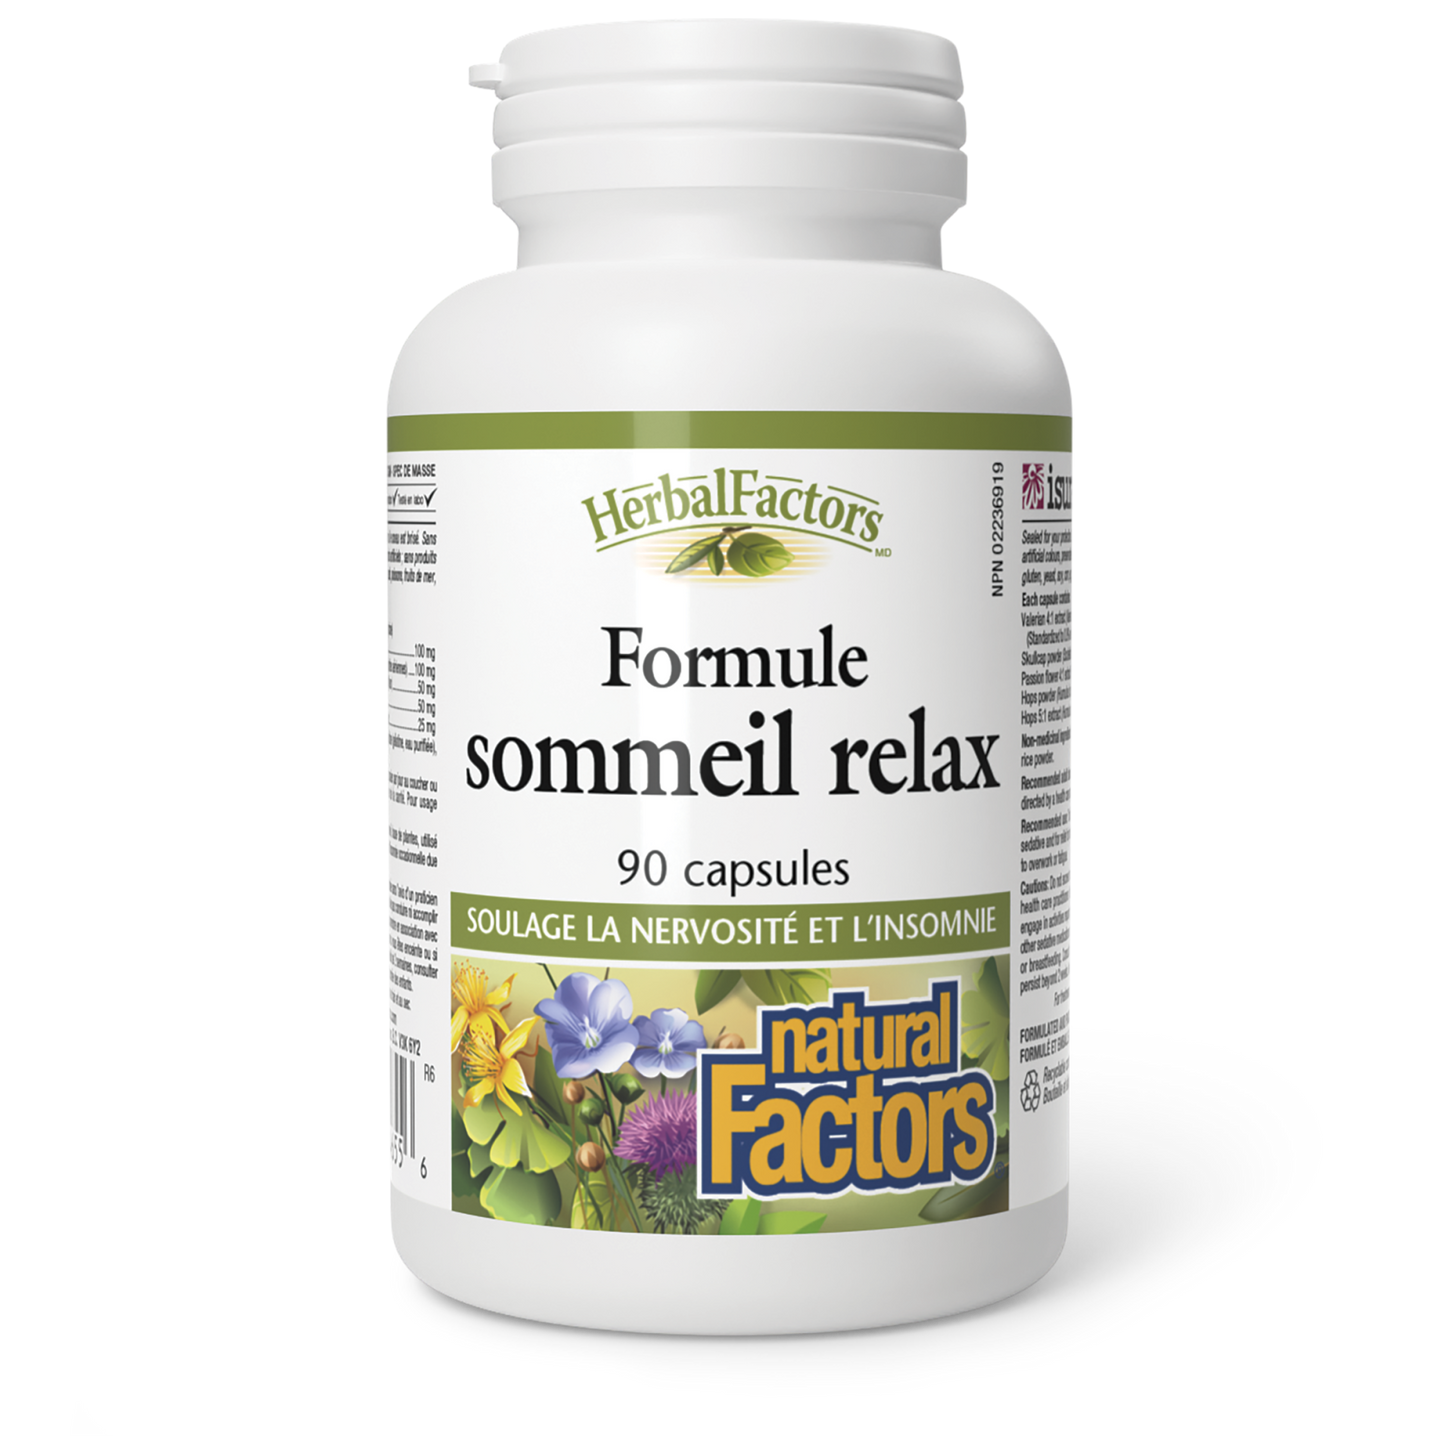 Formule sommeil relax, HerbalFactors, Natural Factors|v|image|4655